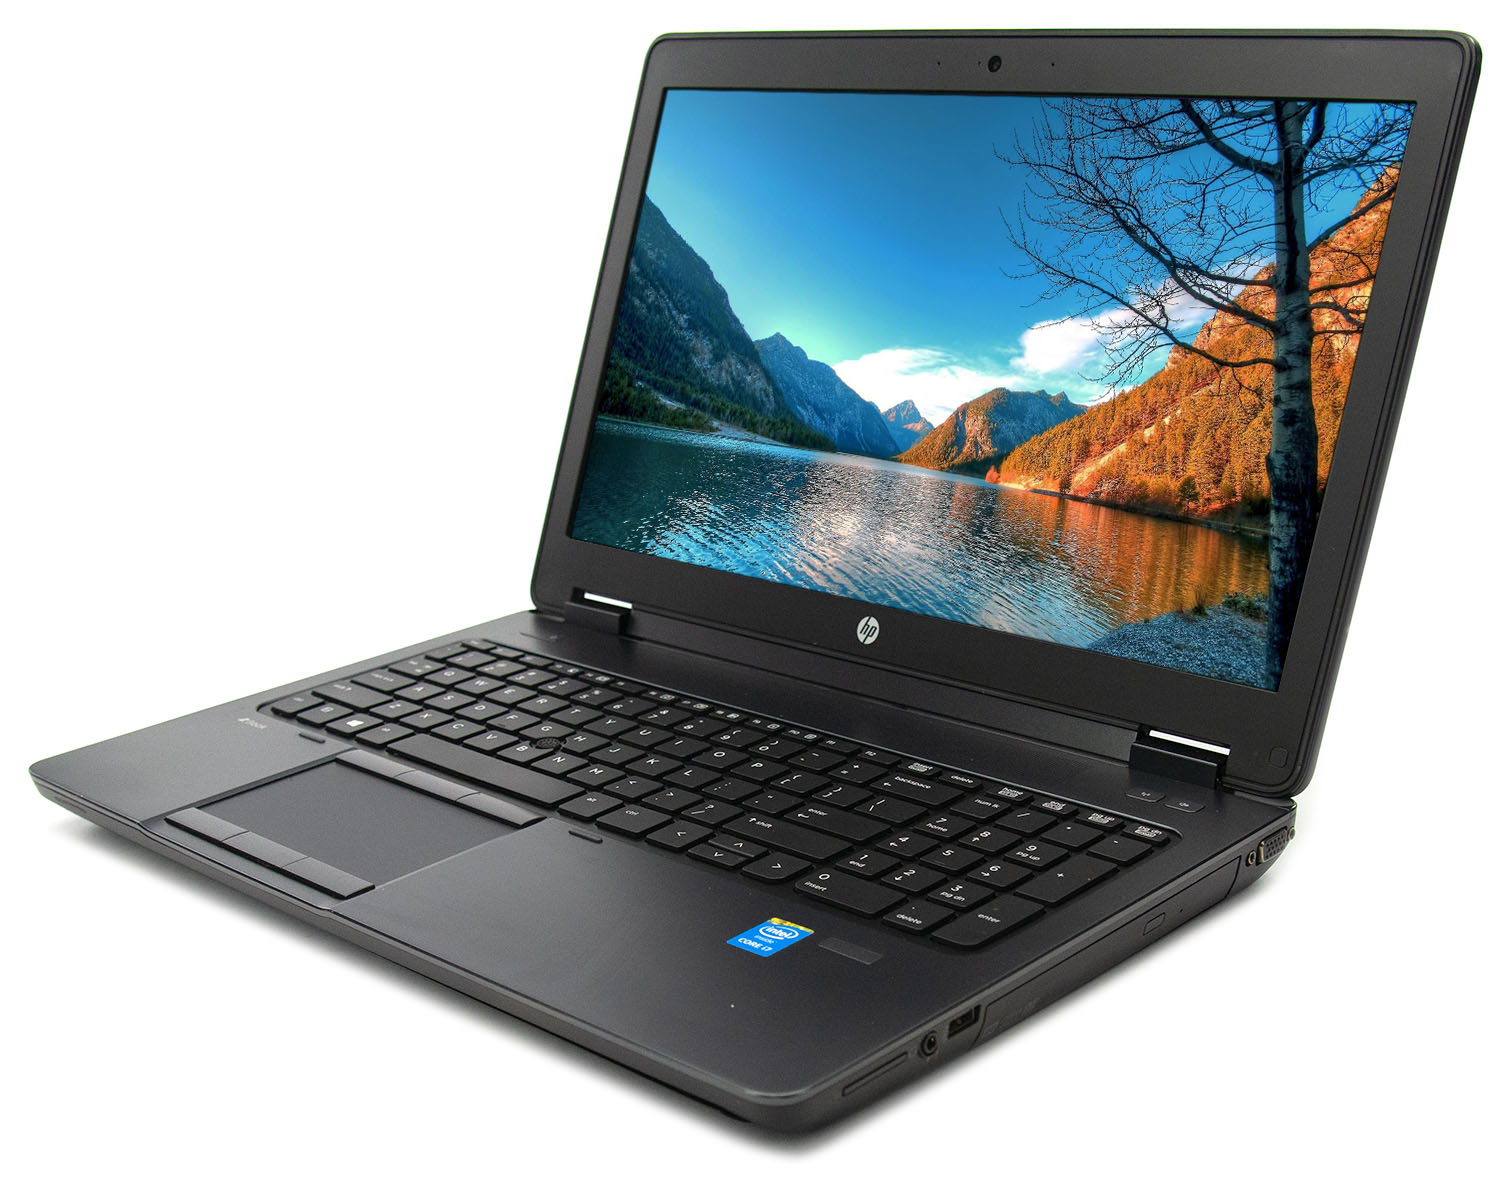 Art. Portátil HP Workstation ZBOOK 15 G2 GRADO B Nvidia K1100M 2GB (Intel Core i7 4810MQ 2.8Ghz/16GB/240SSD/15.6"FHD/DVDRW/W8P) Preinstalado